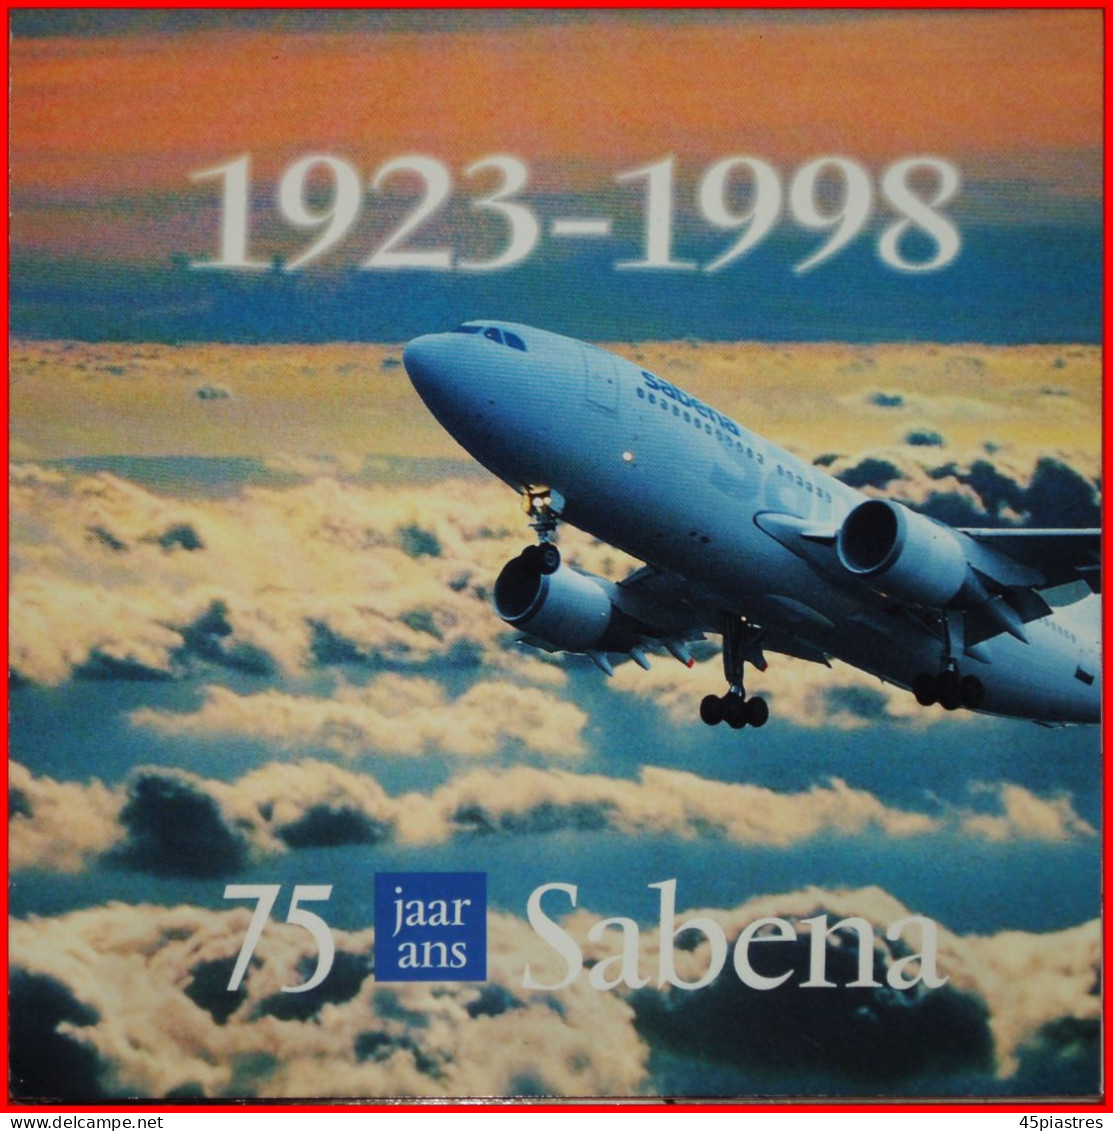 * PLANE 1923 - SWITZERLAND 1995: BELGIUM  MINT SET 1998 10 COINS WITH MEDAL!  · LOW START · NO RESERVE! - FDEC, BU, BE & Münzkassetten